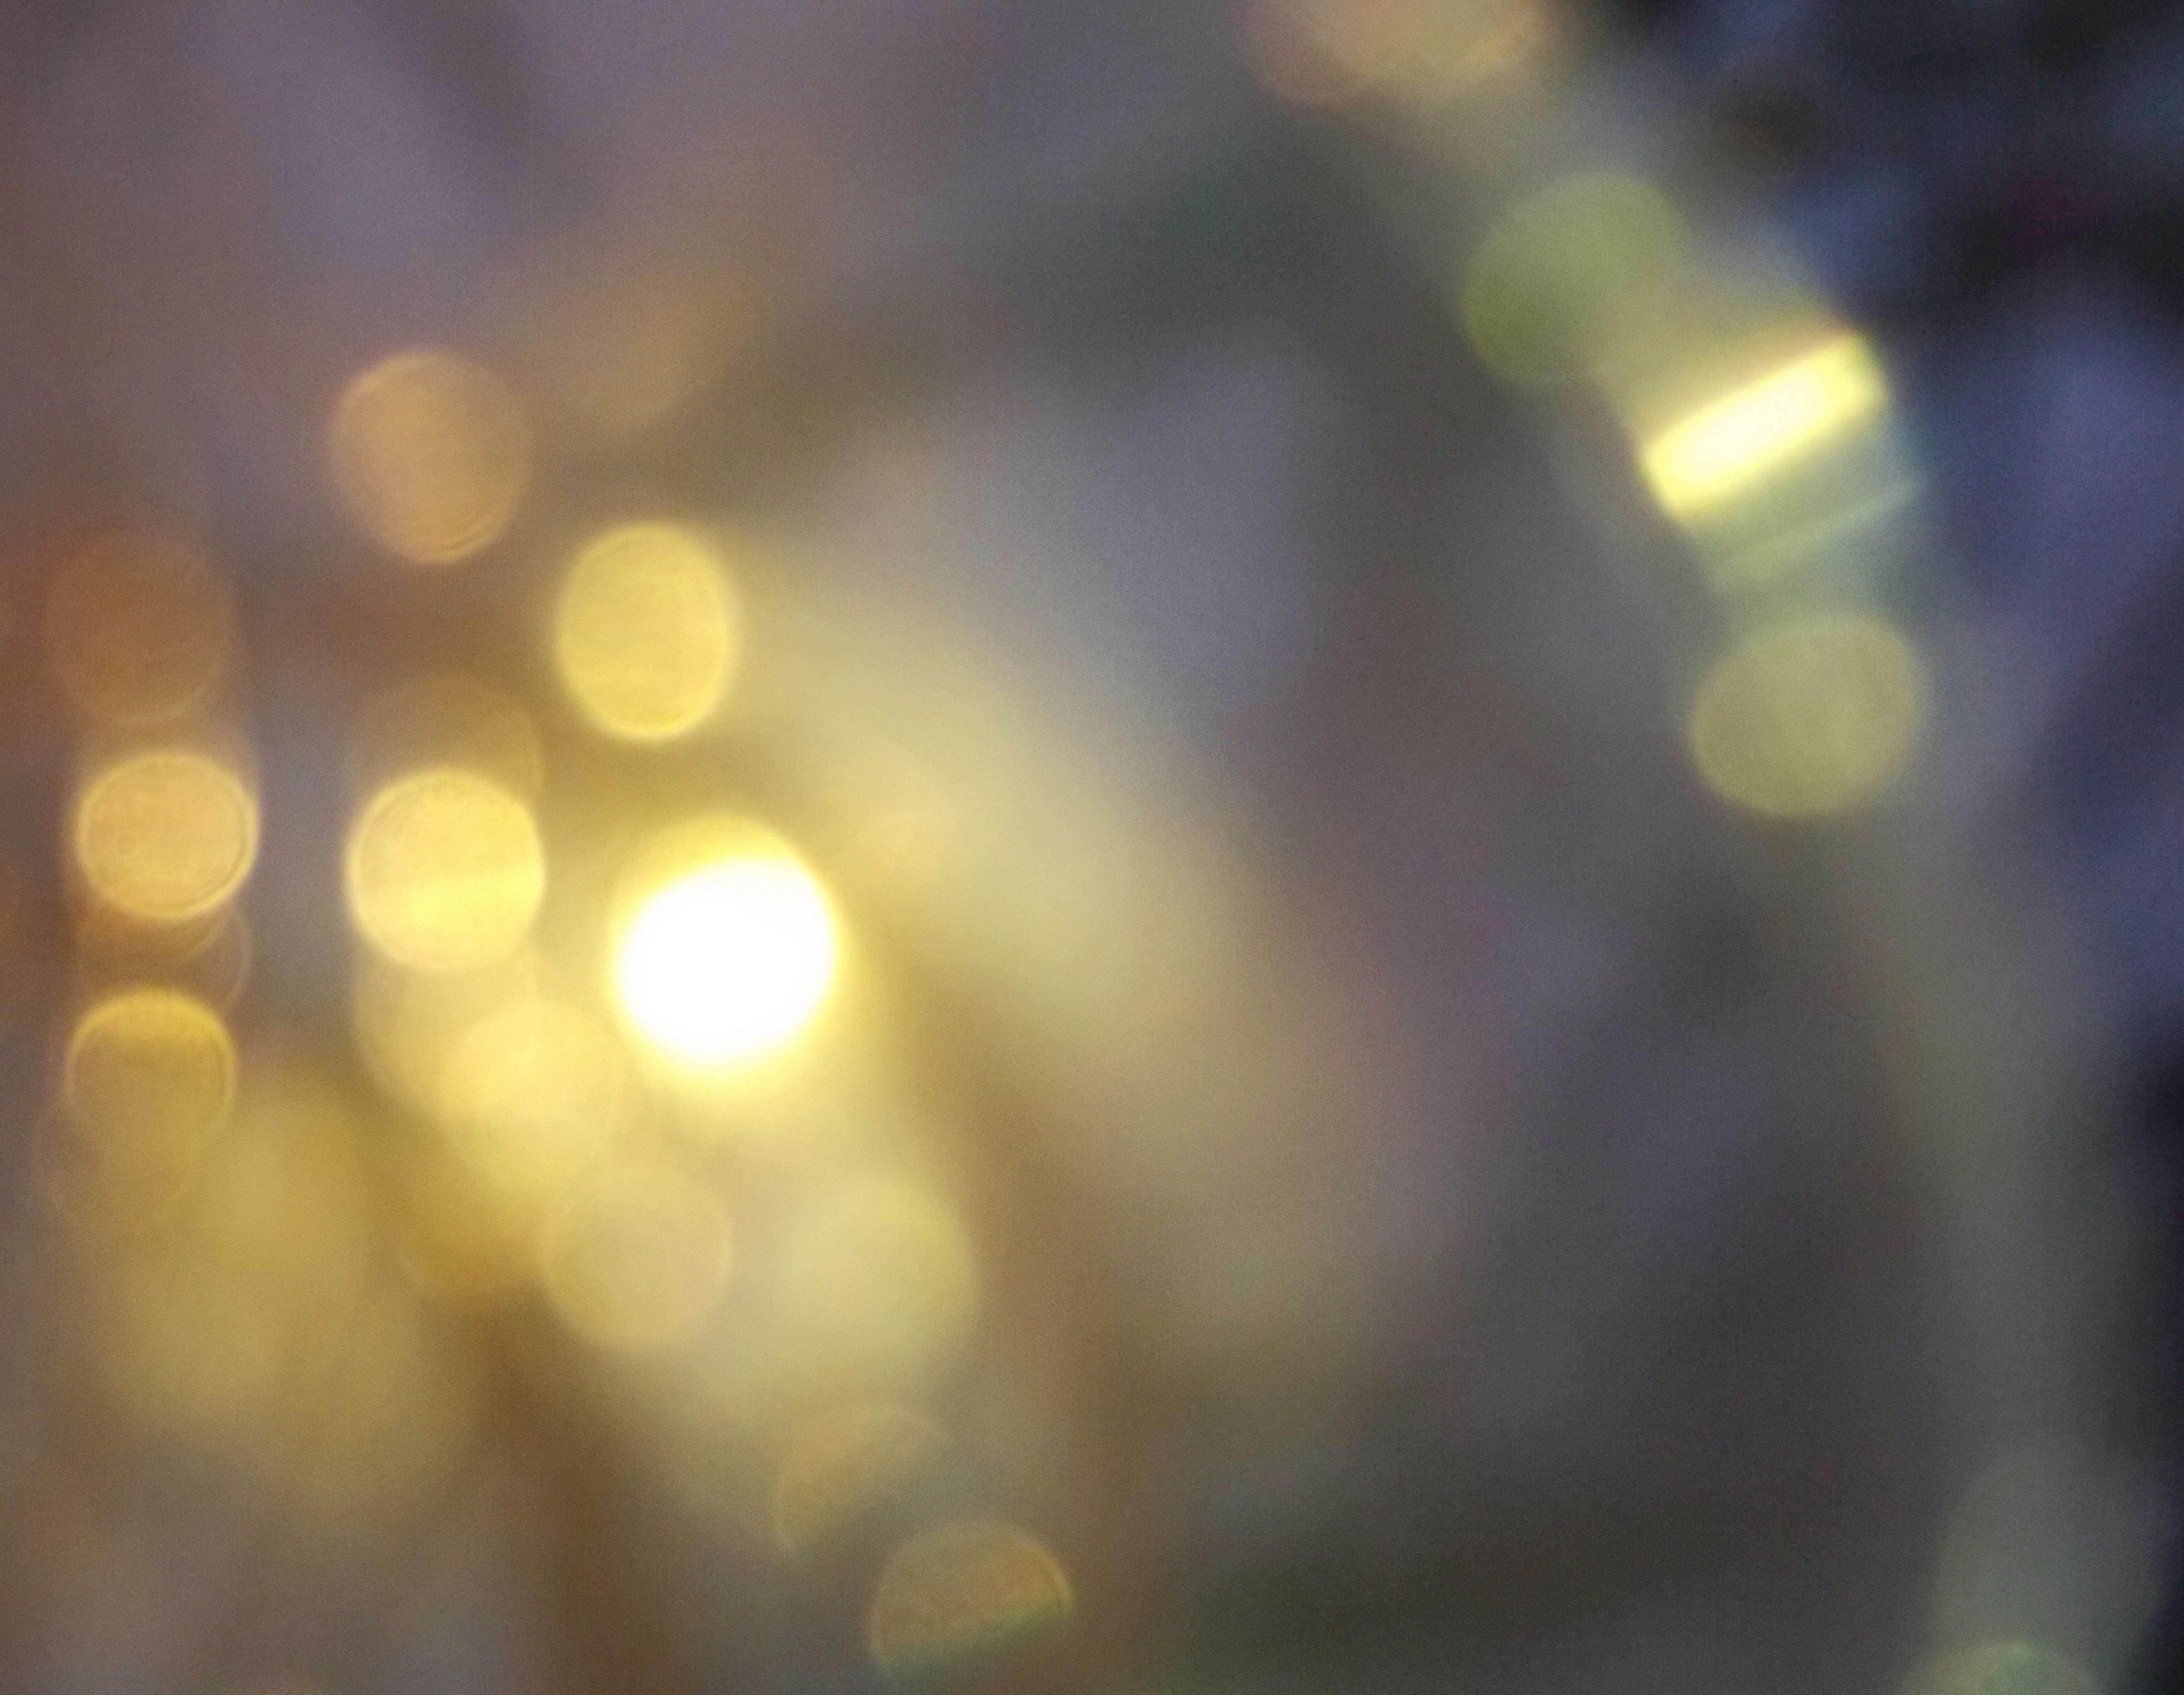 Free stock photo of blur, blurred, garden lights